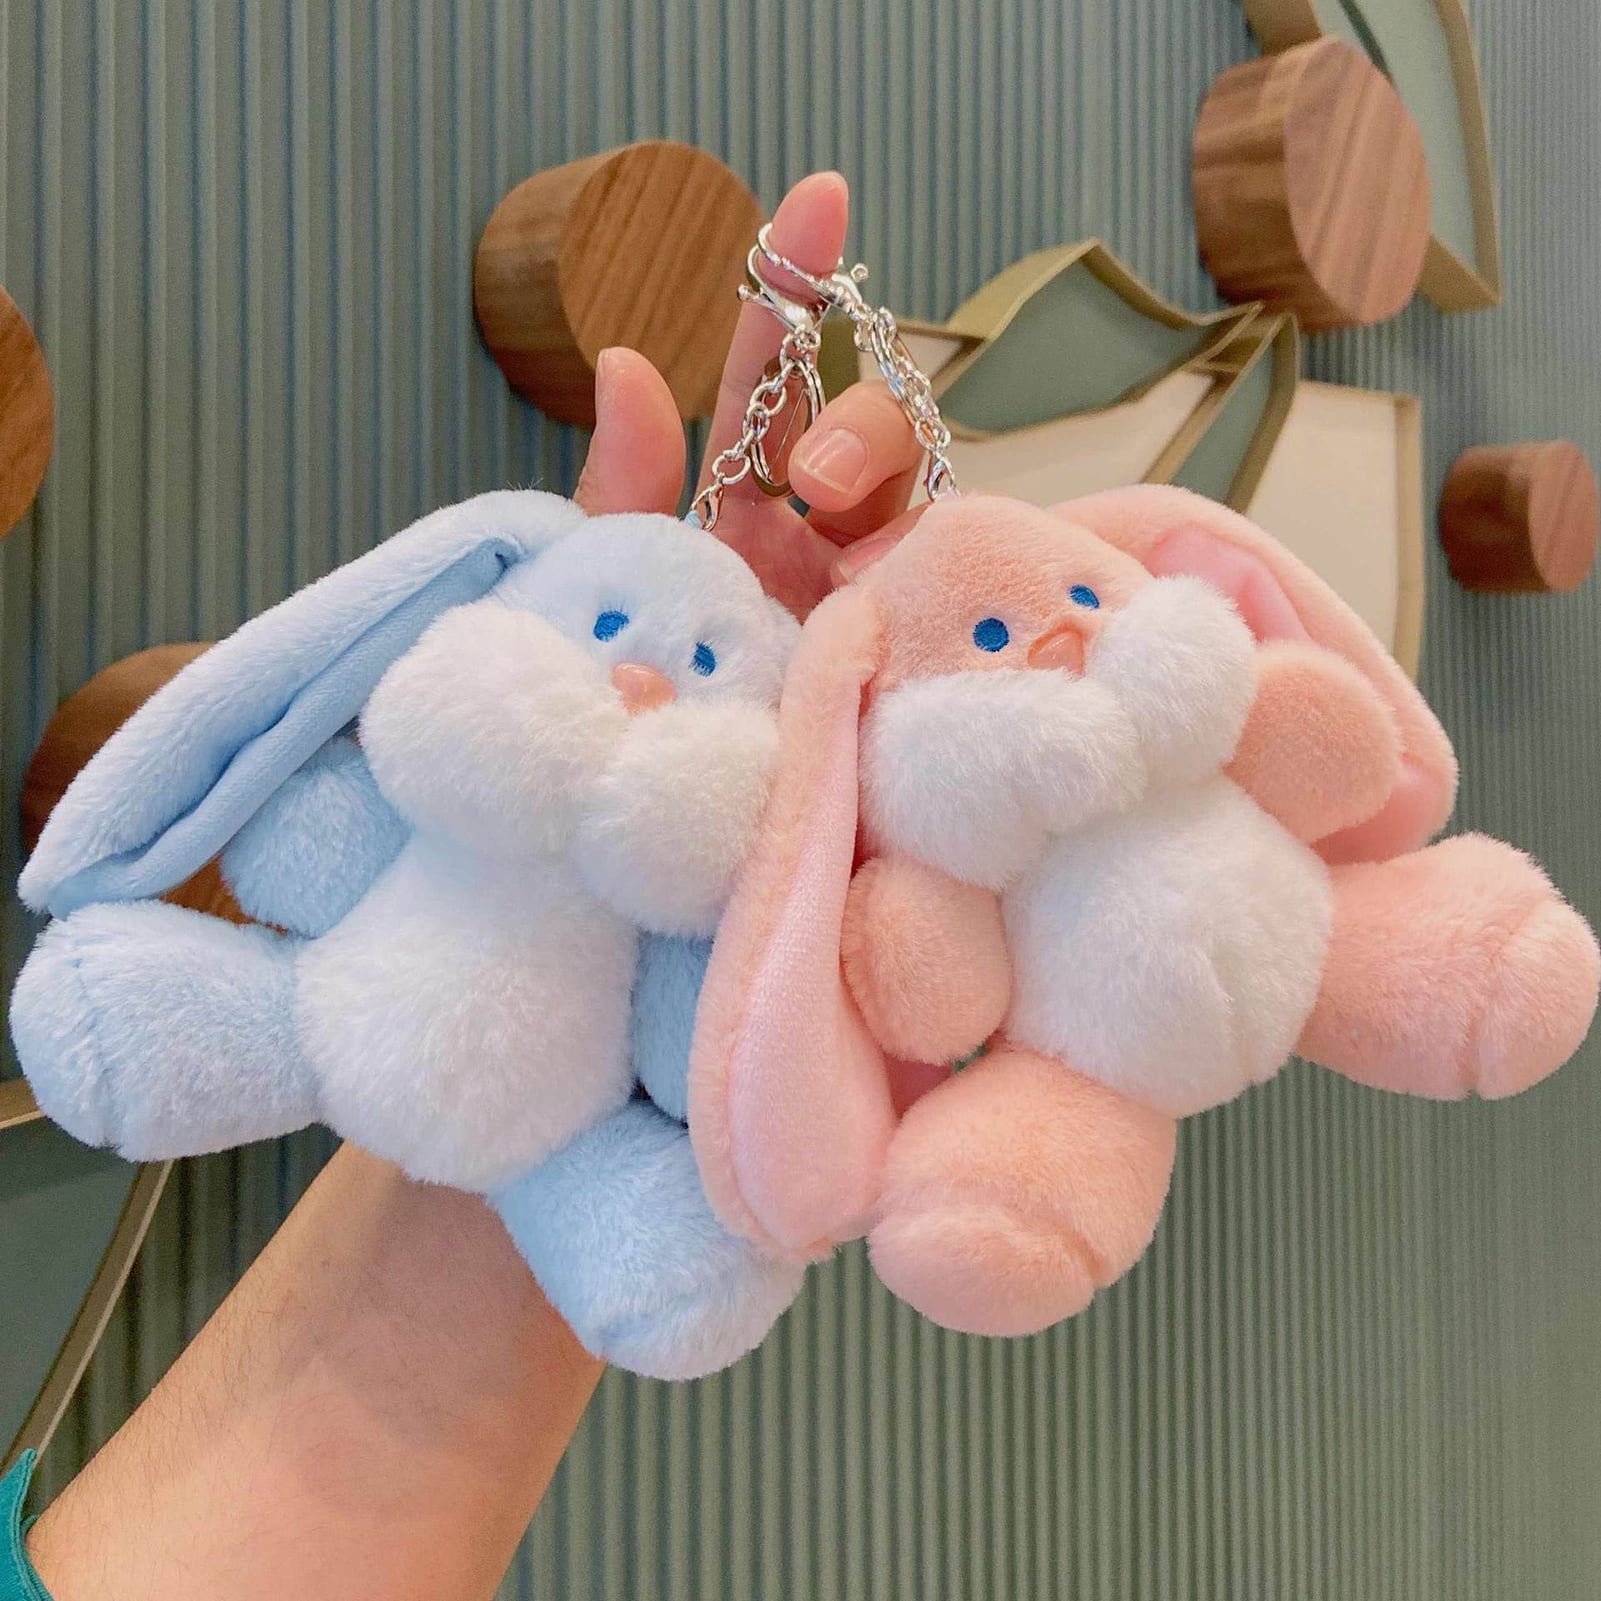 Cute Mink Fur Rabbit Key Chain Soft Bunny Doll Handbag Pendent Car Keyring  NEW